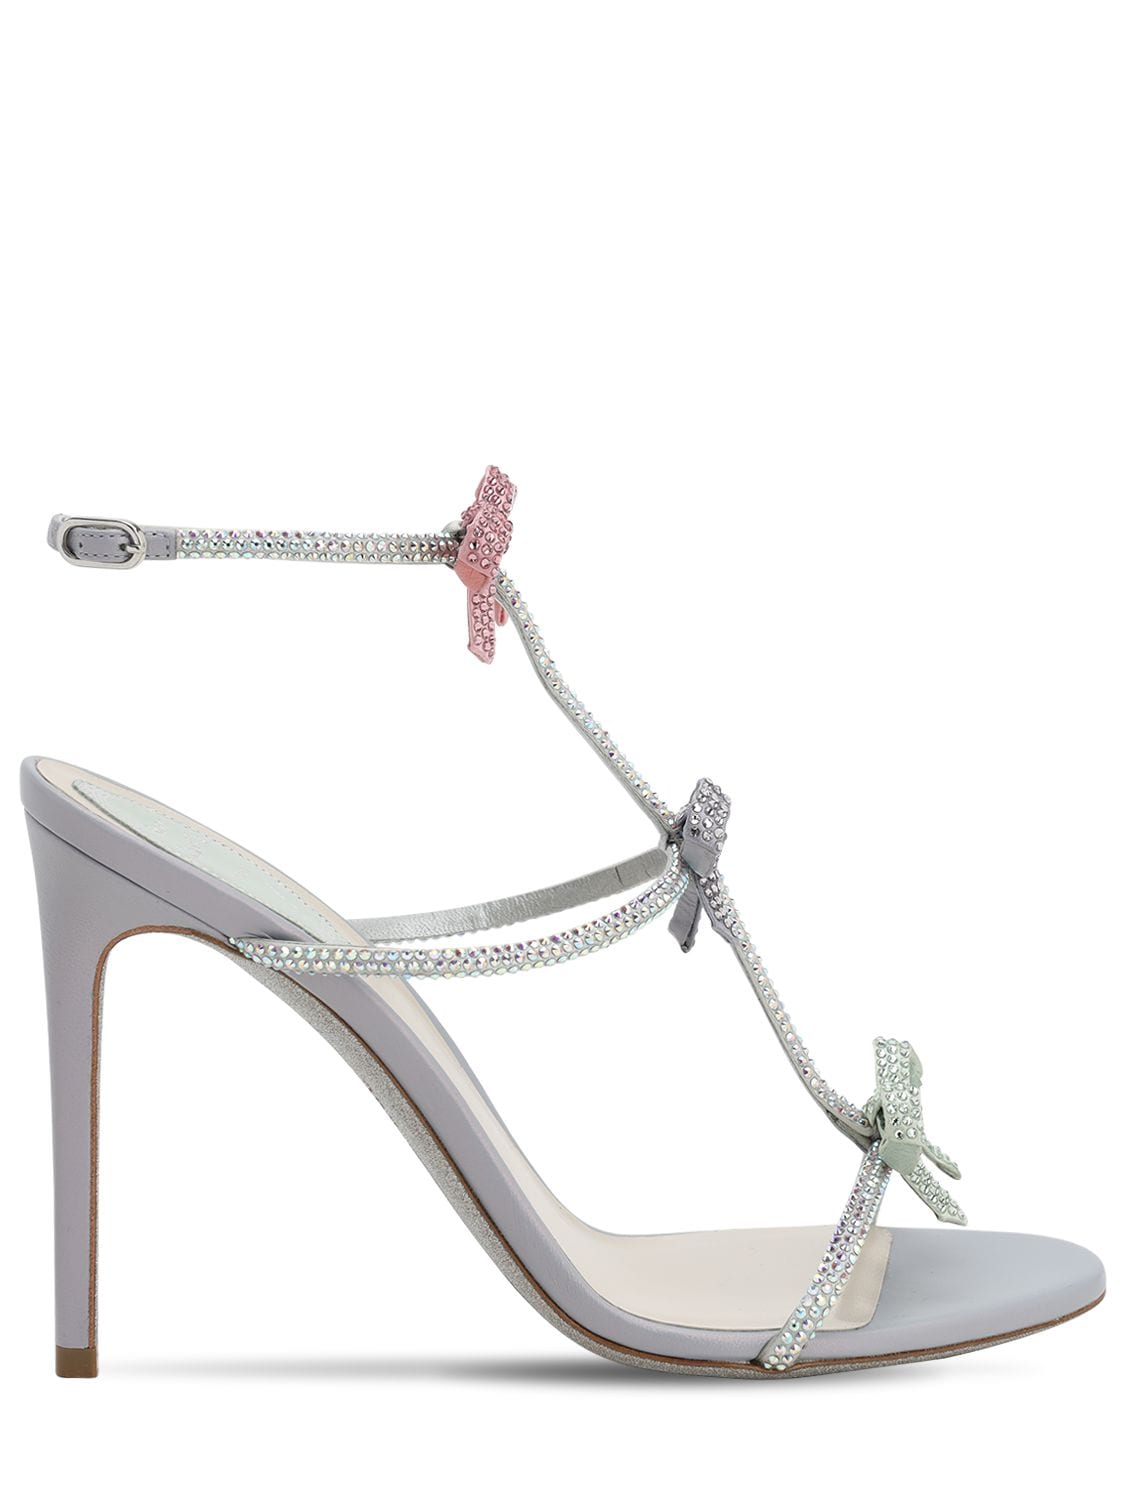 René Caovilla 105mm Satin & Crystals Sandals In Silver